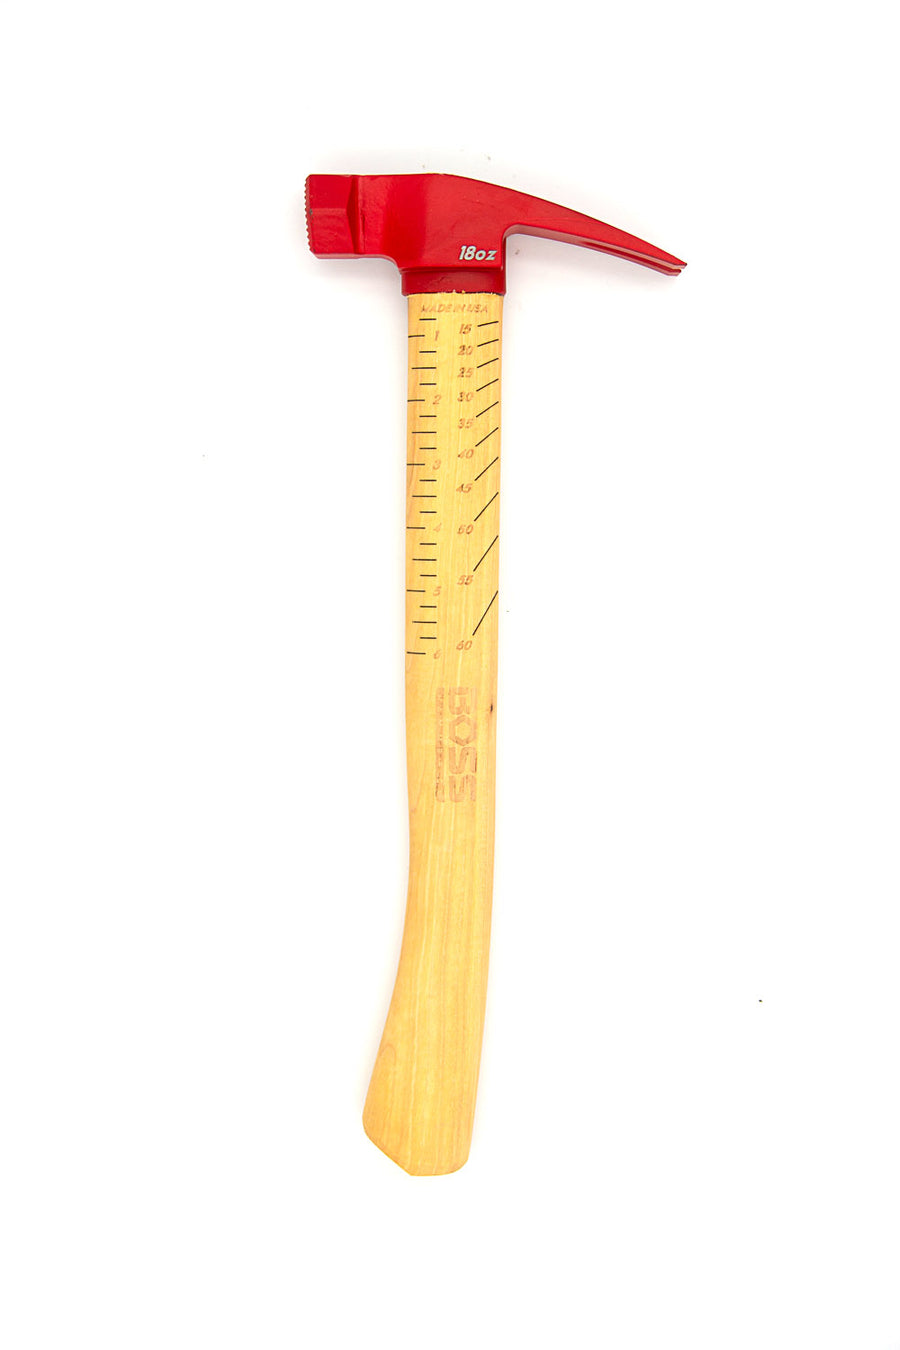 18 oz. Steel Hammer | Hickory Handle